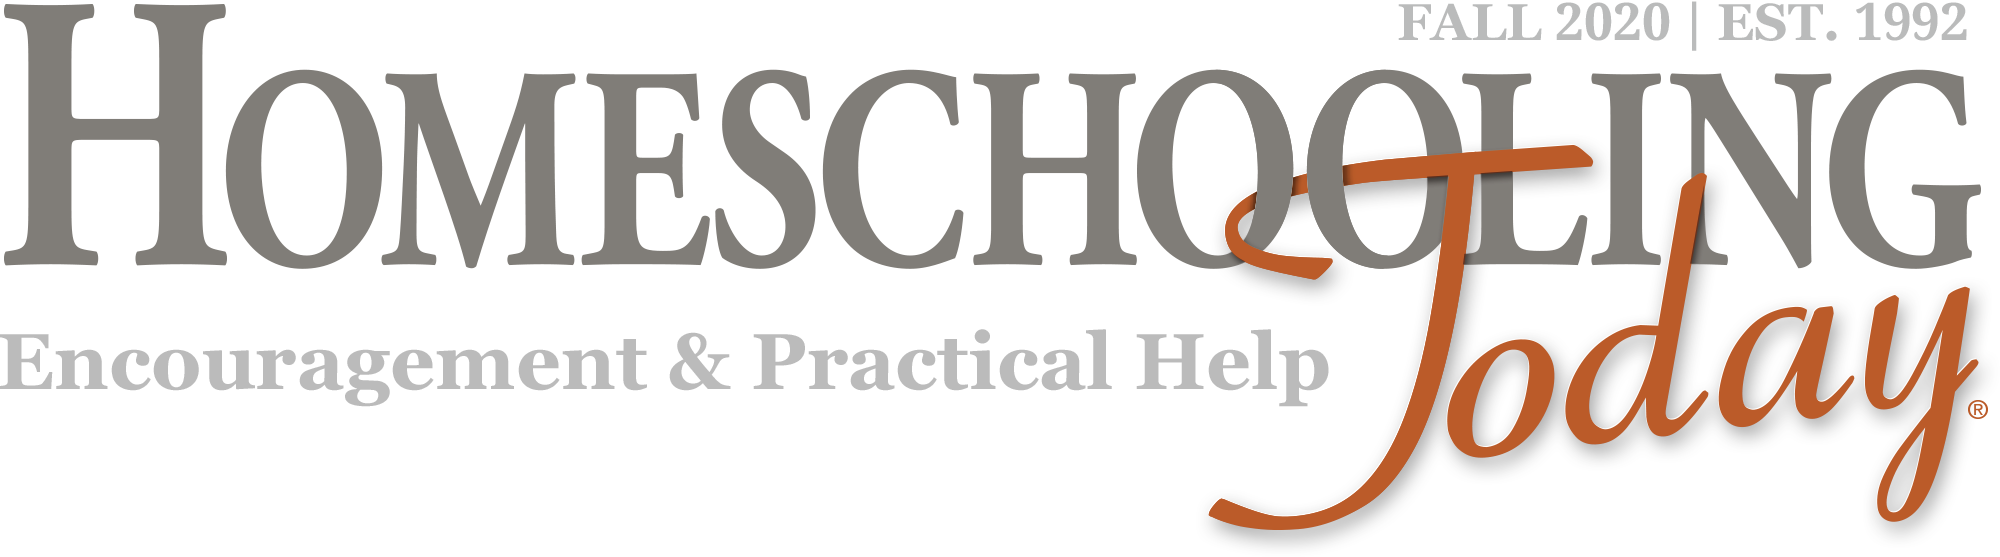 Homeschooling Today Fall 2020 logo